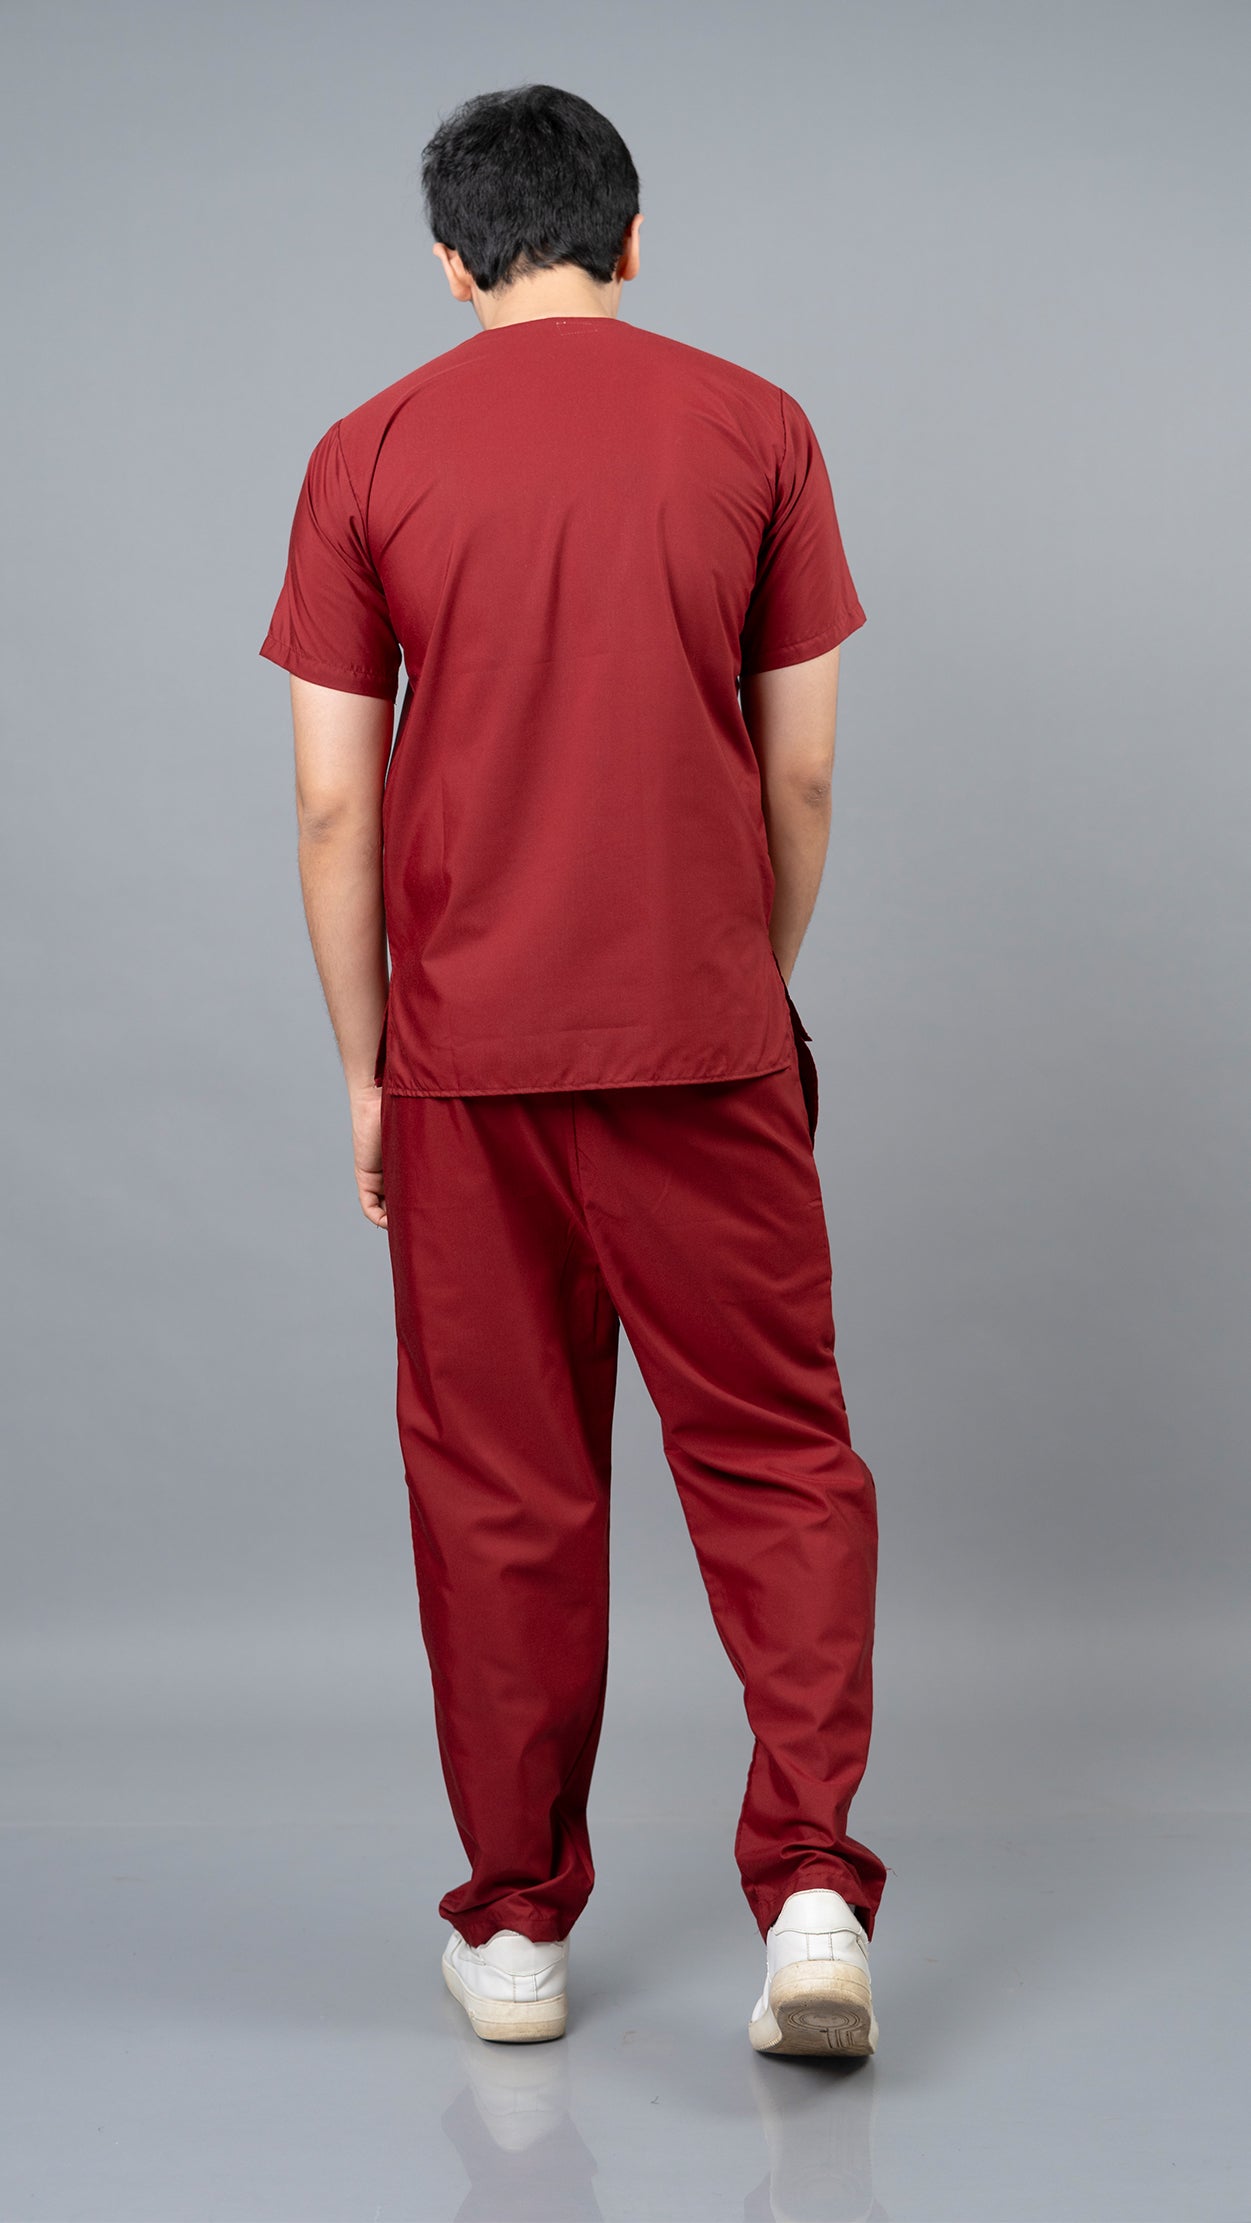 Vastramedwear Basic Medical Scrub Suit for Doctors Mens Maroon